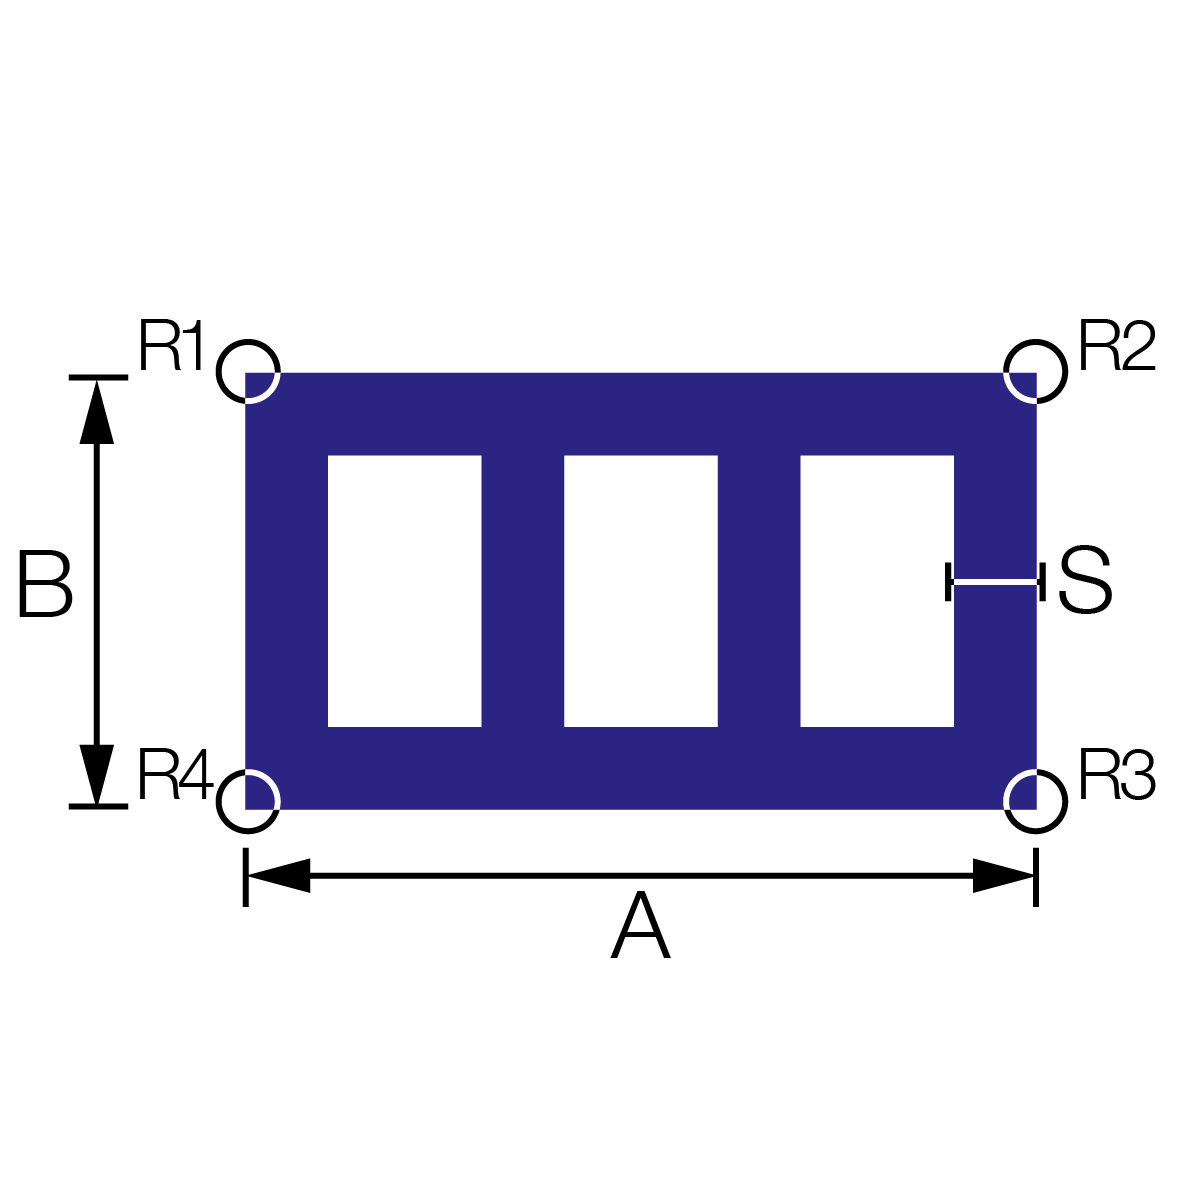 Tubos rectangulares / cuadrados con doble inserción